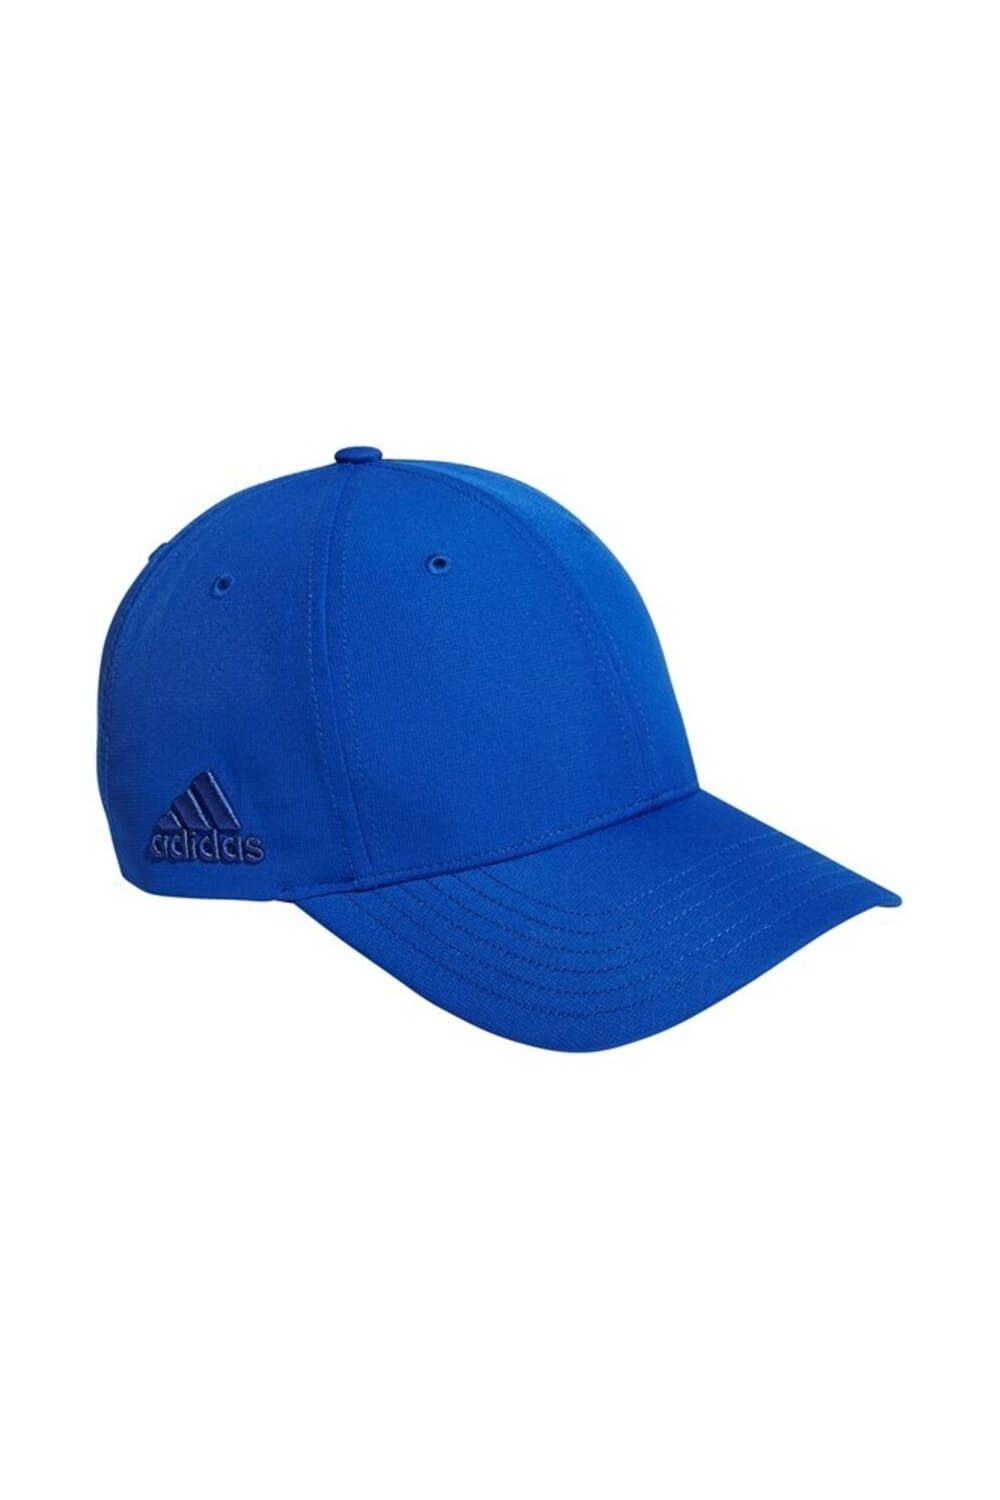 Unisex Adult Crestable Performance Golf Cap - Blue